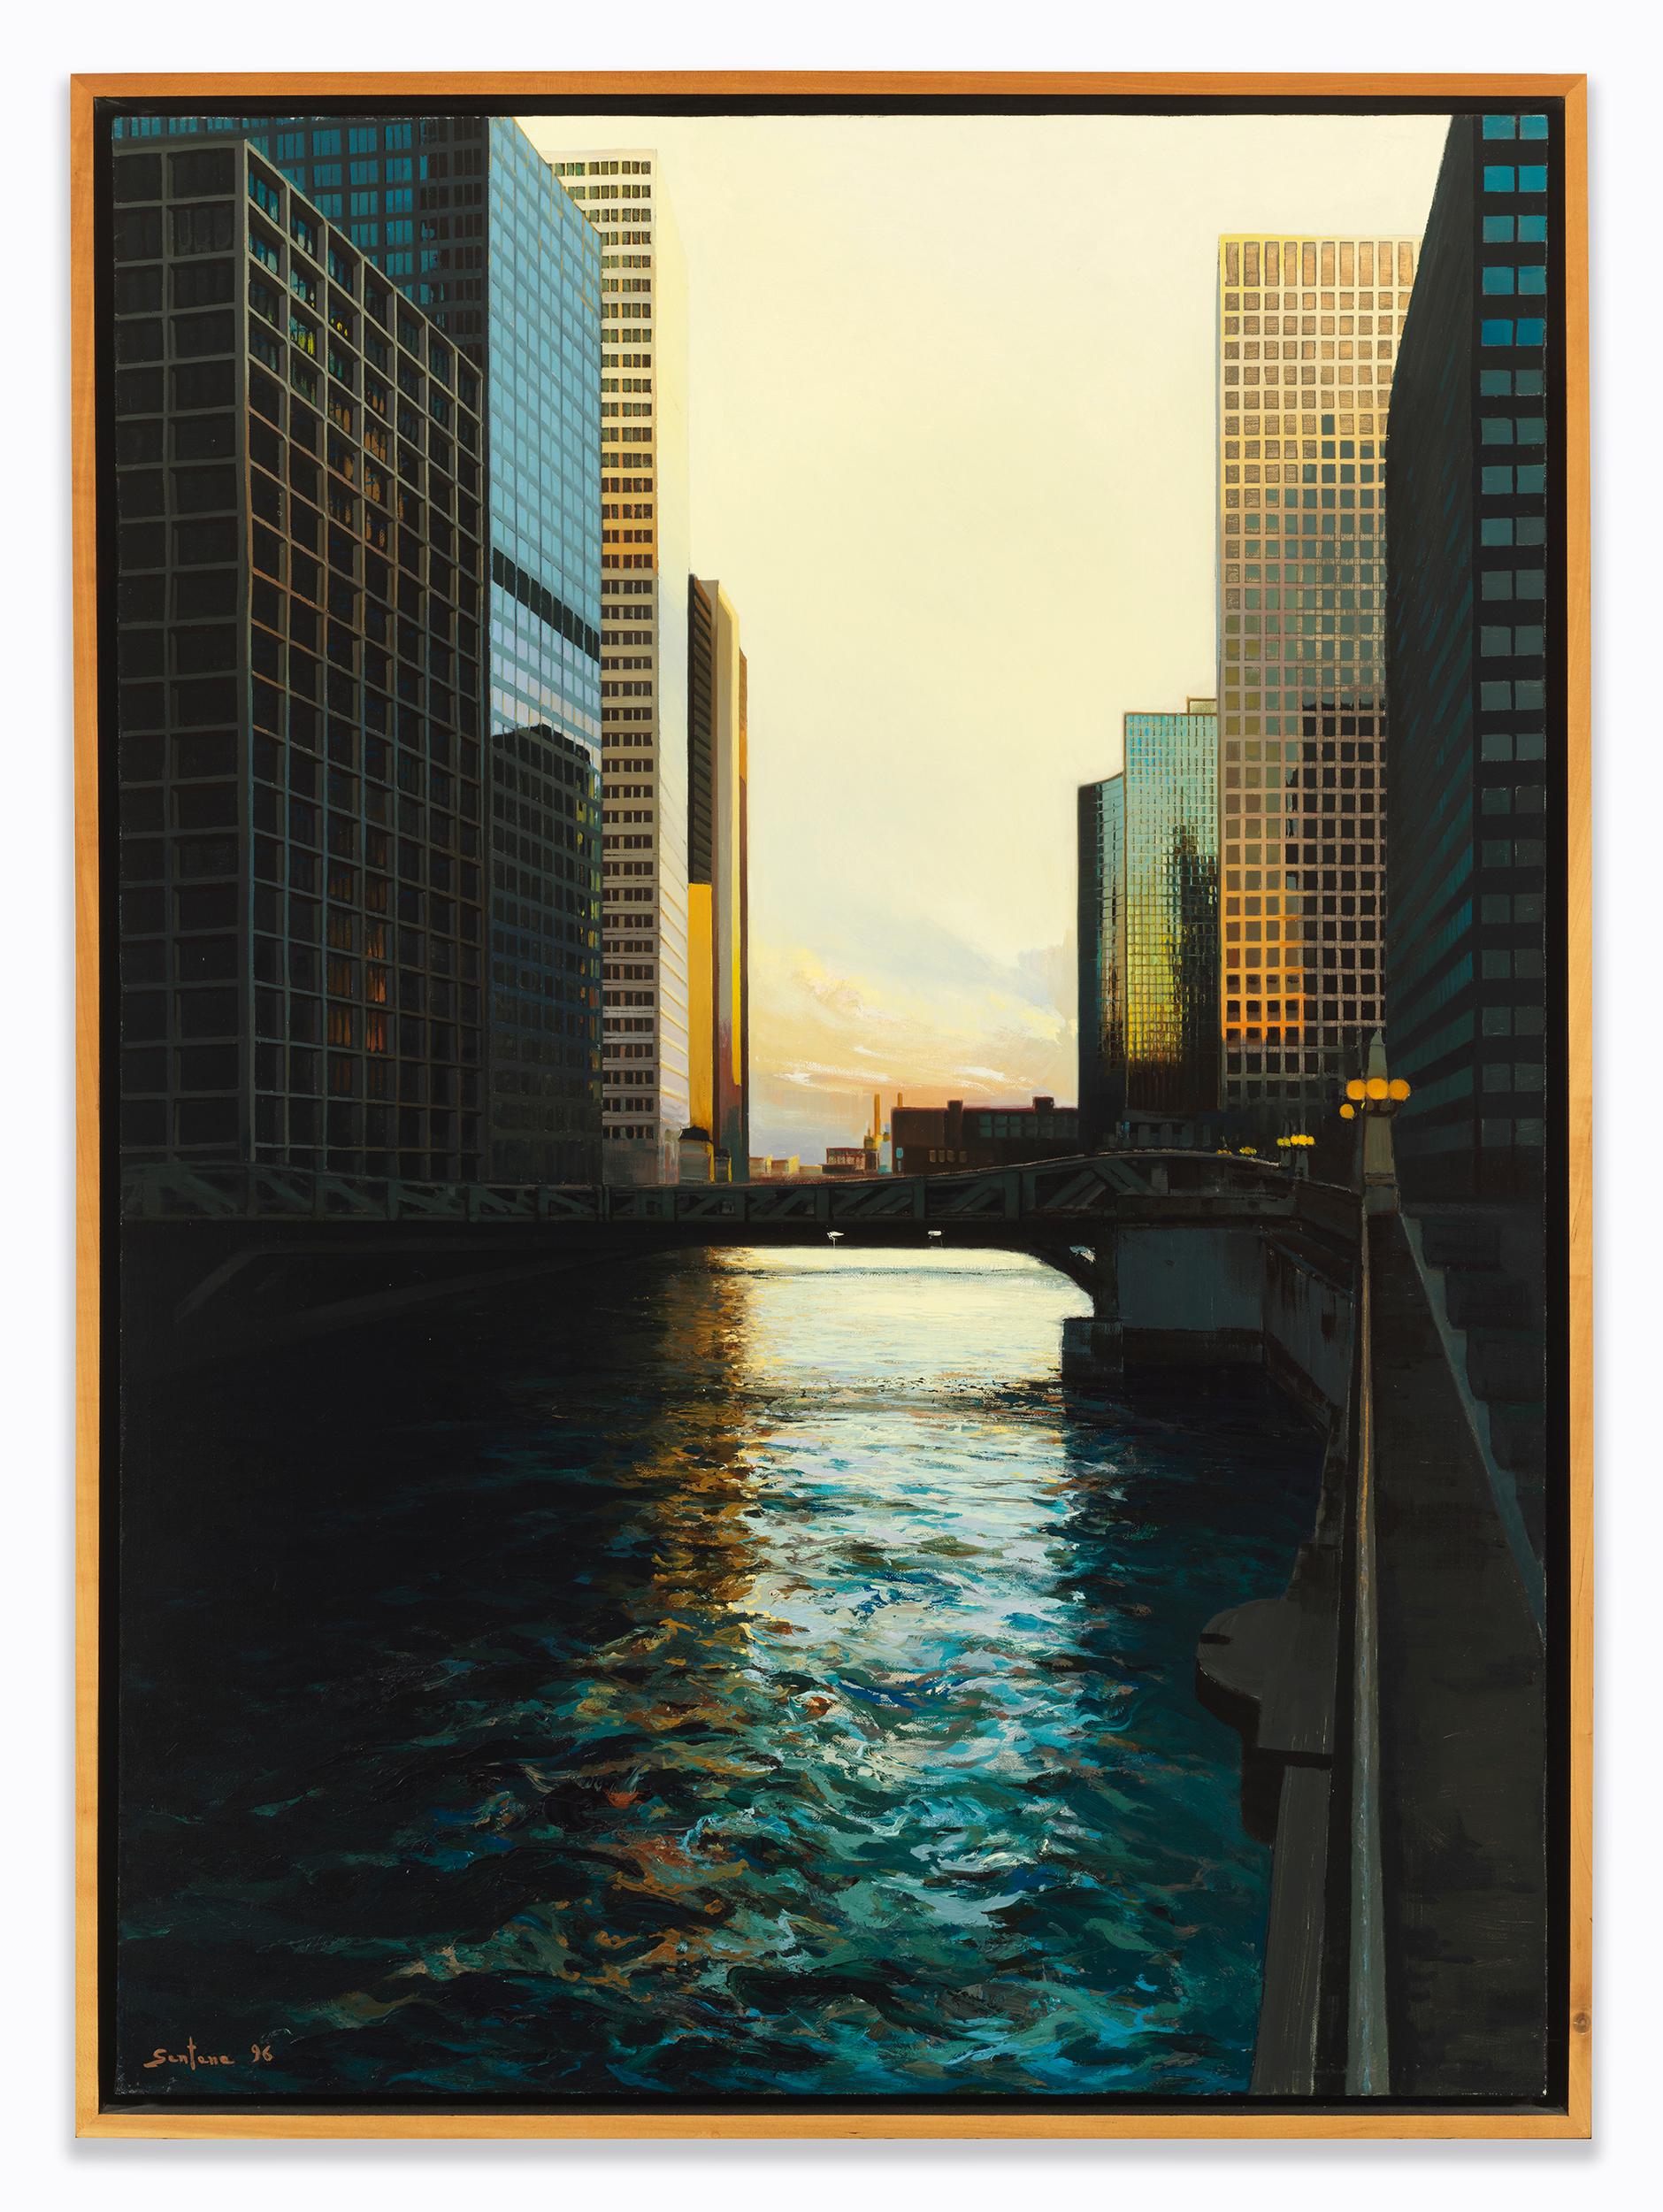 River Bridge, Urban Landscape, Chicago's Loop and Chicago River, Oil on Linen - Painting by Enrique Santana